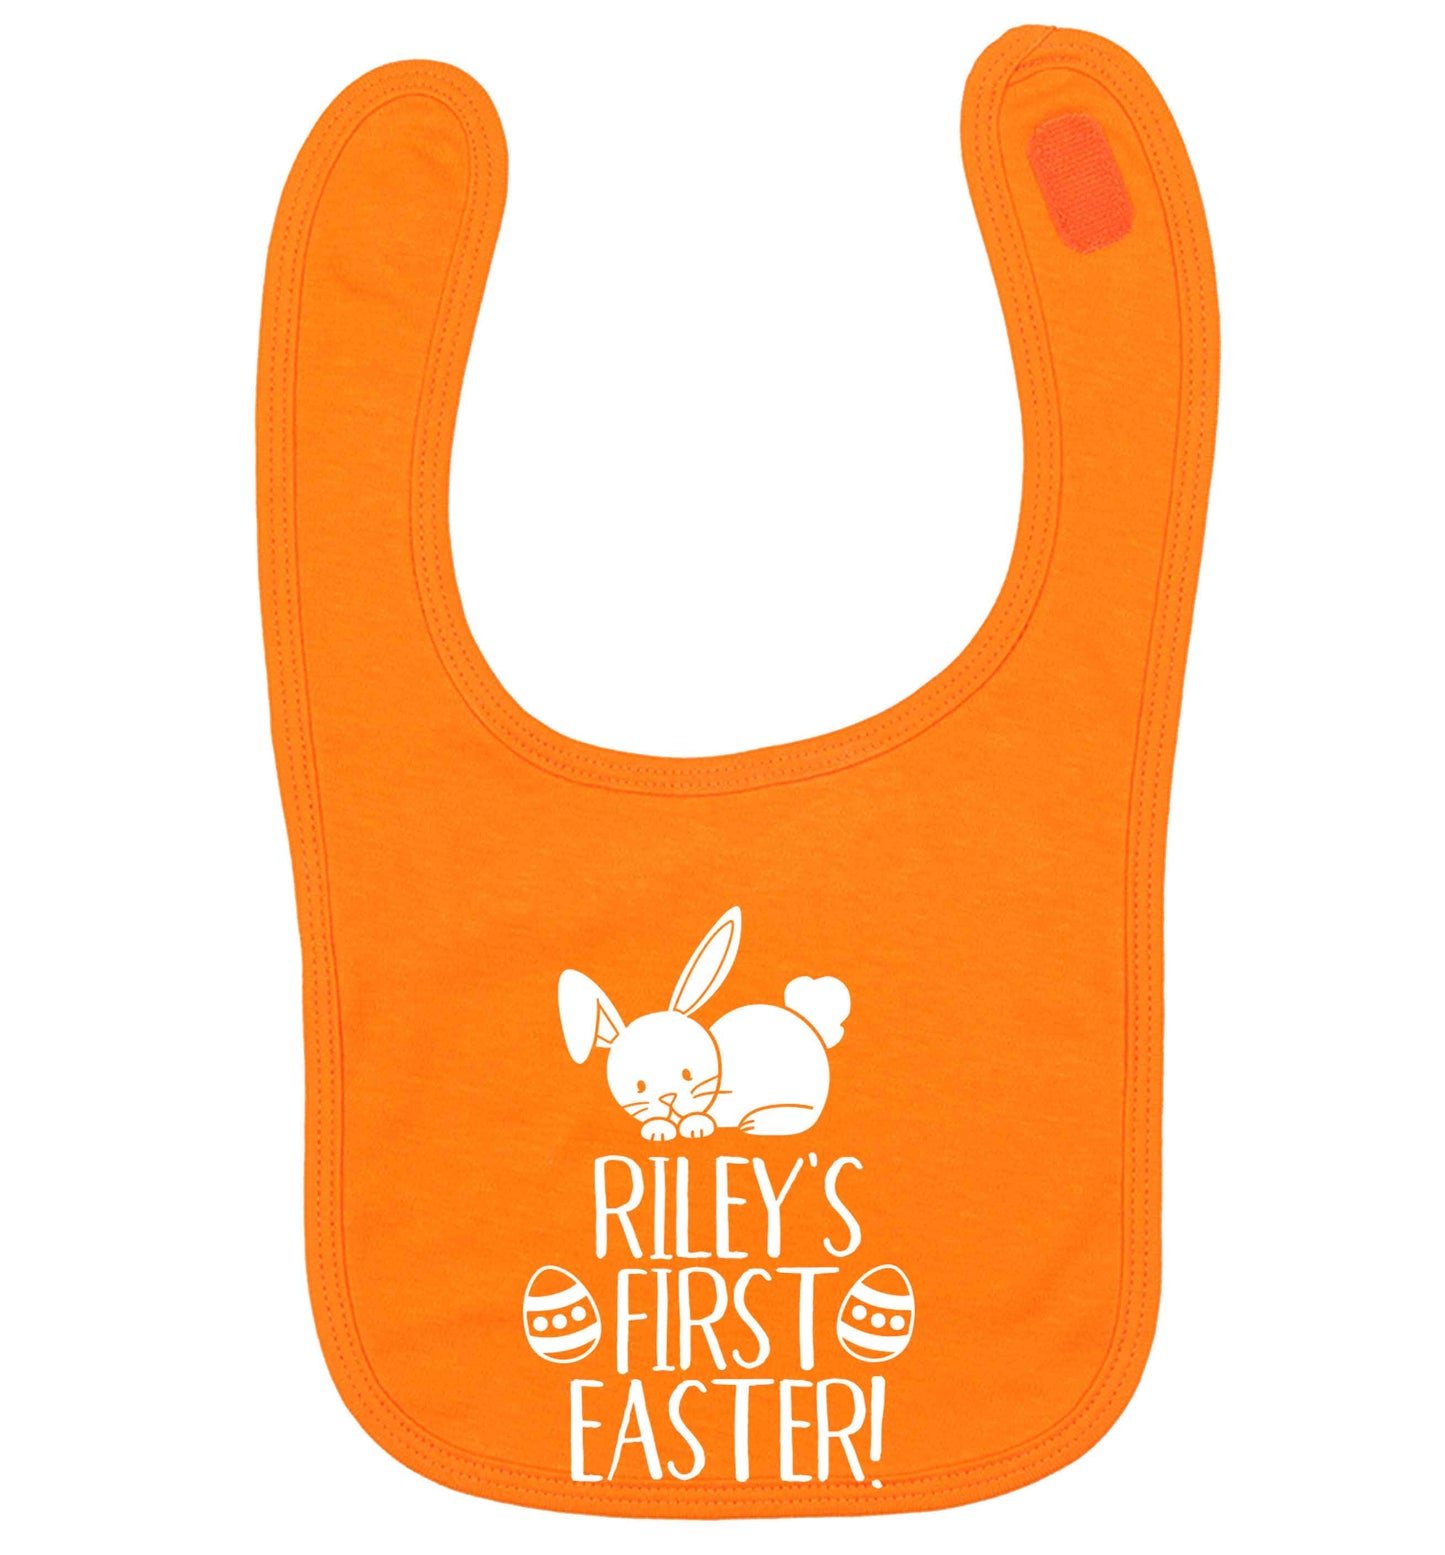 Personalised first Easter orange baby bib